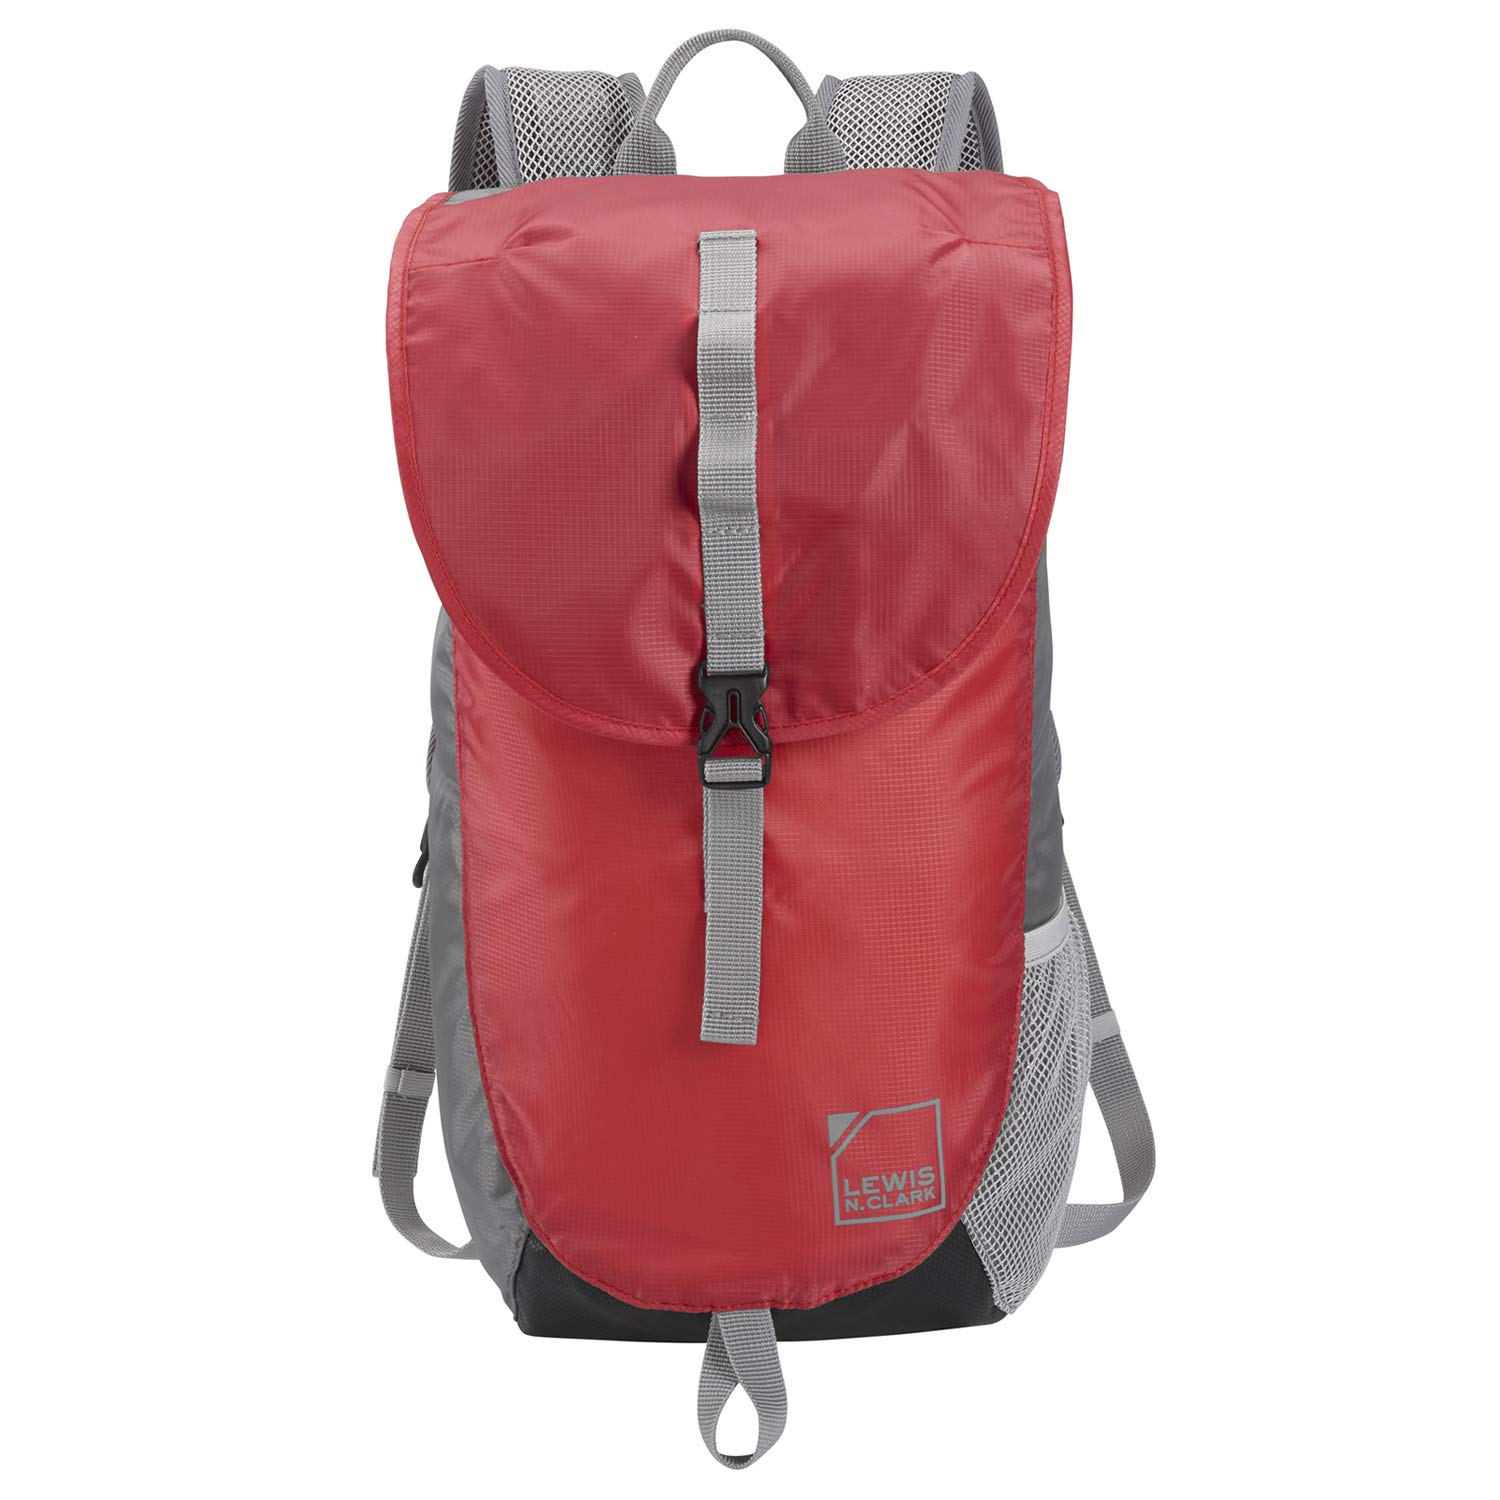 Lewis N. Clark Lightweight Packable Backpack Bag w/RFID Pocket, Red/Gray, 18 inch